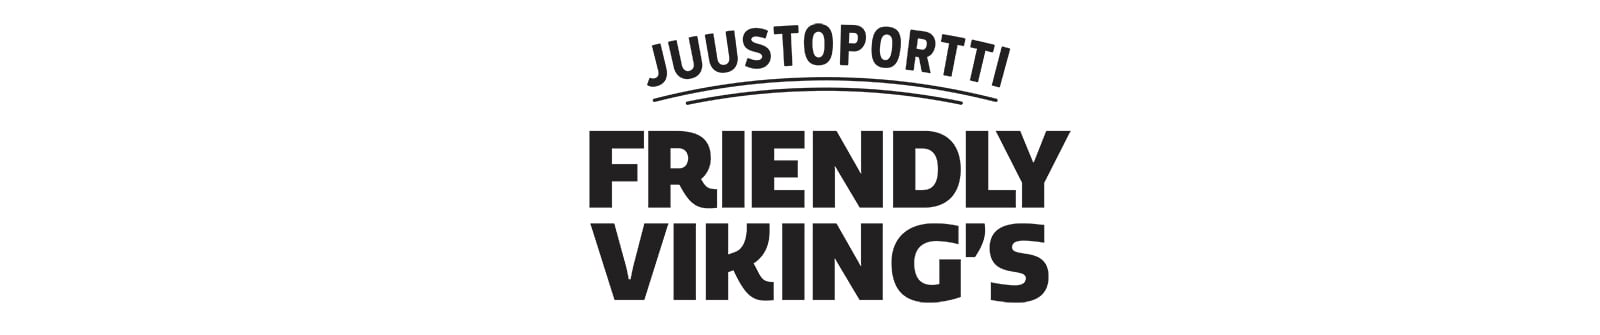 logo_Juustoportti_Friendly_Vikings_black_1600px